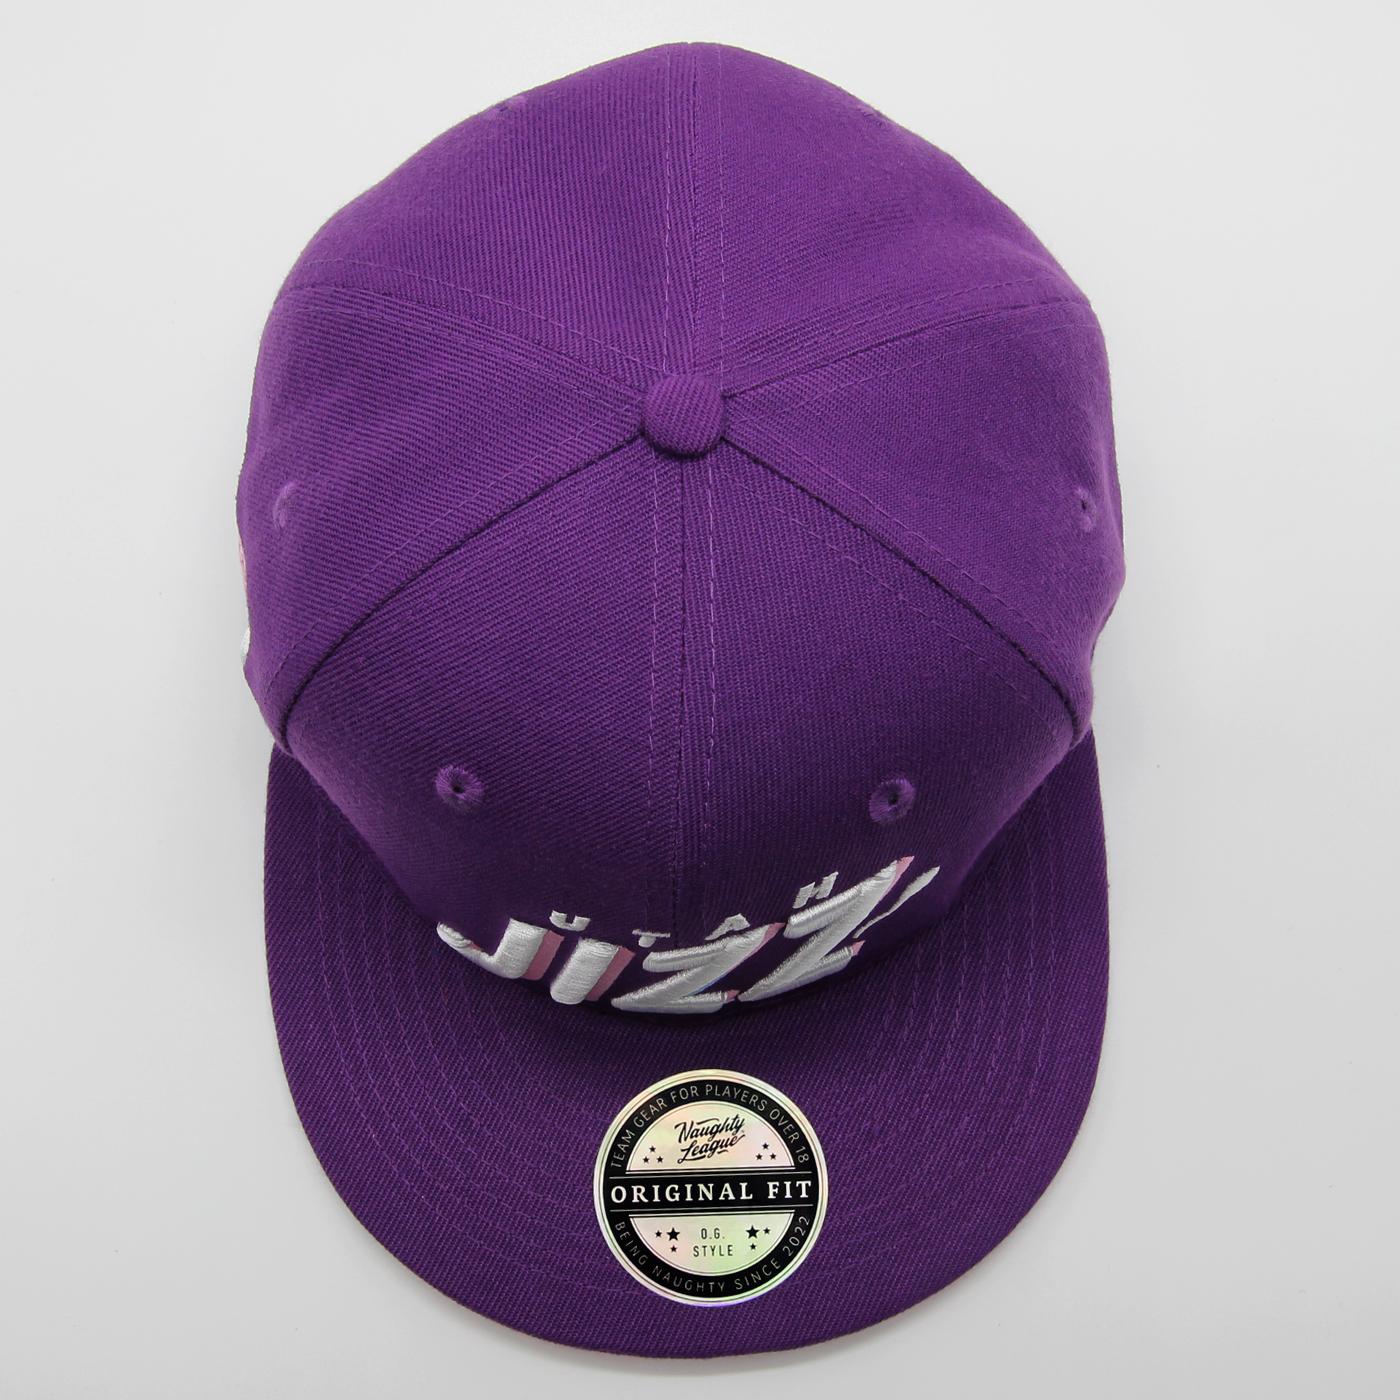 Utah Jizz Text Logo Snapback Purple